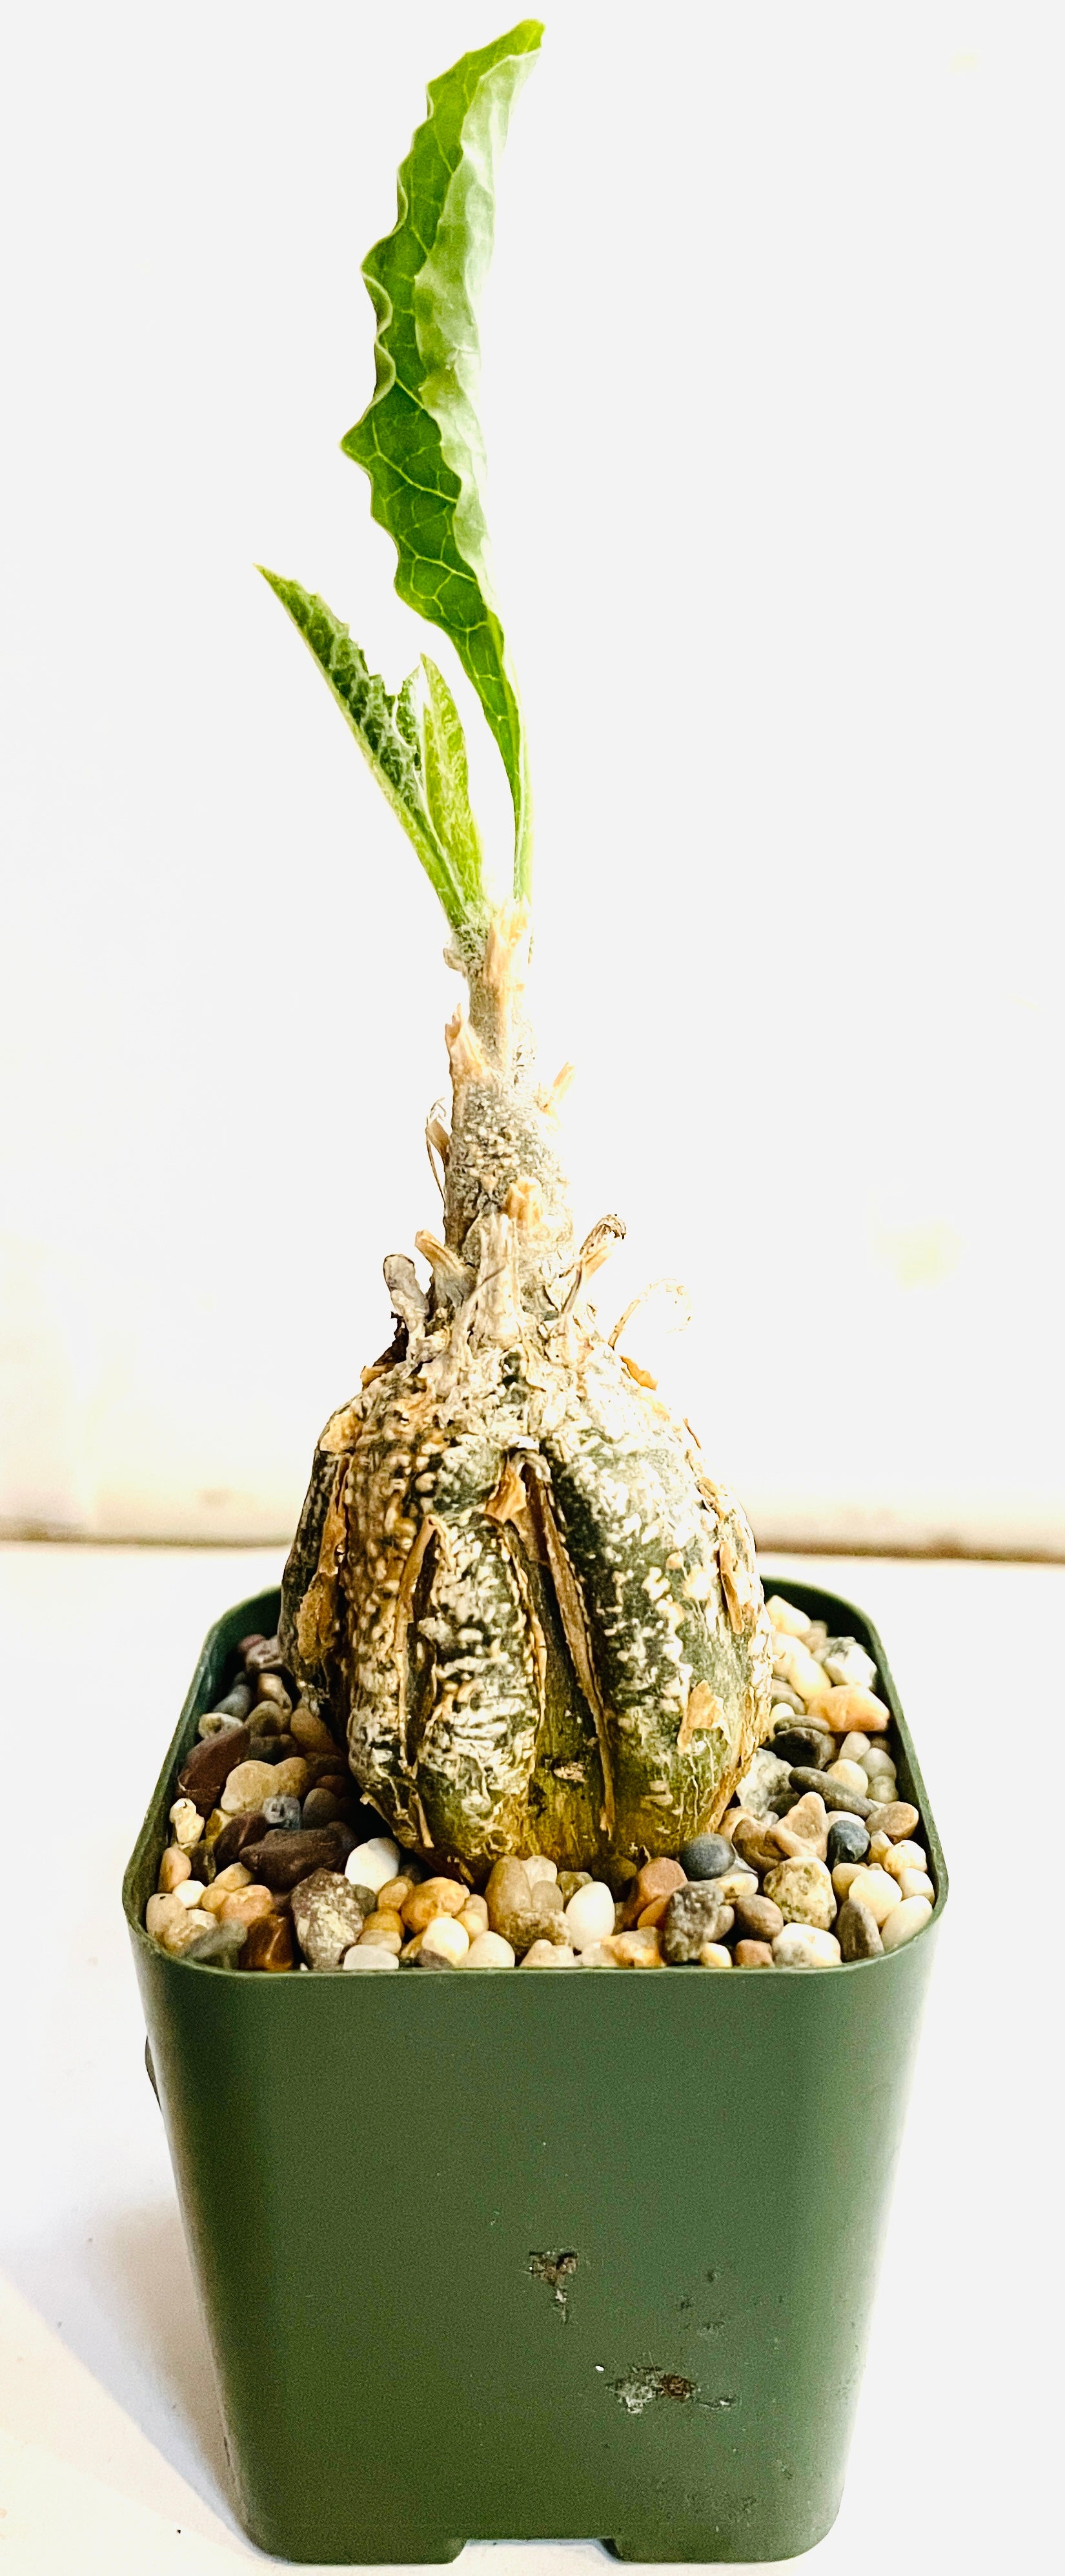 Cephalopentandra ecirrhosa, 2-inch